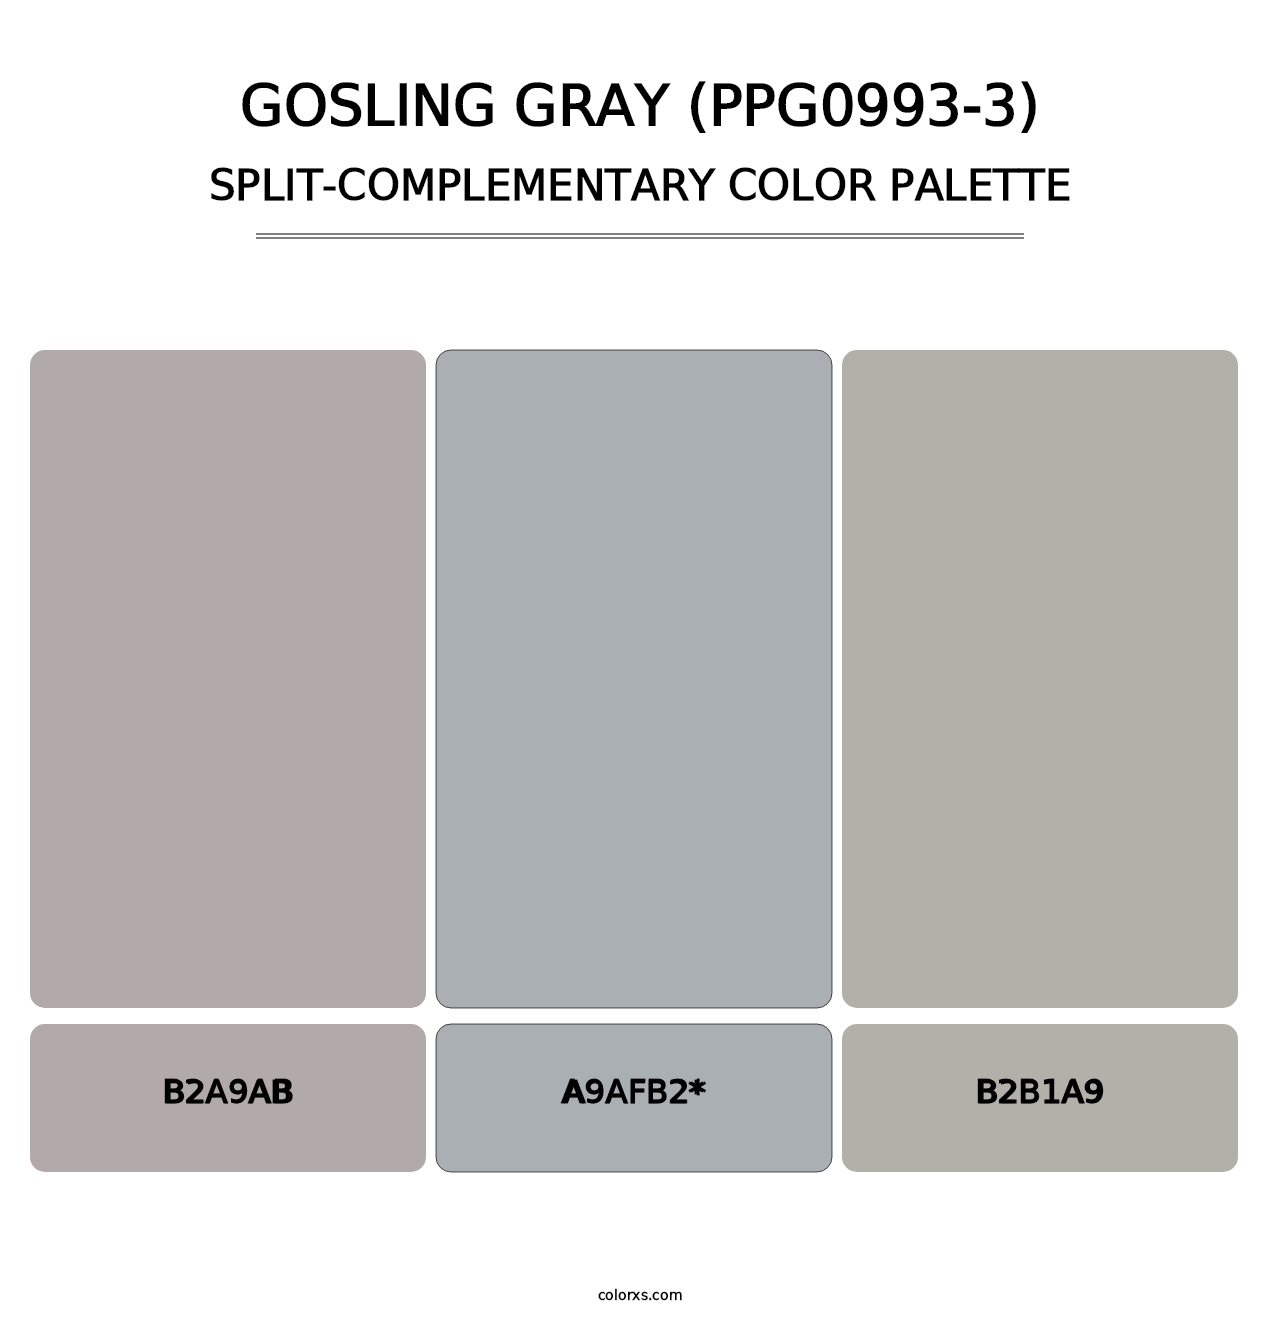 Gosling Gray (PPG0993-3) - Split-Complementary Color Palette